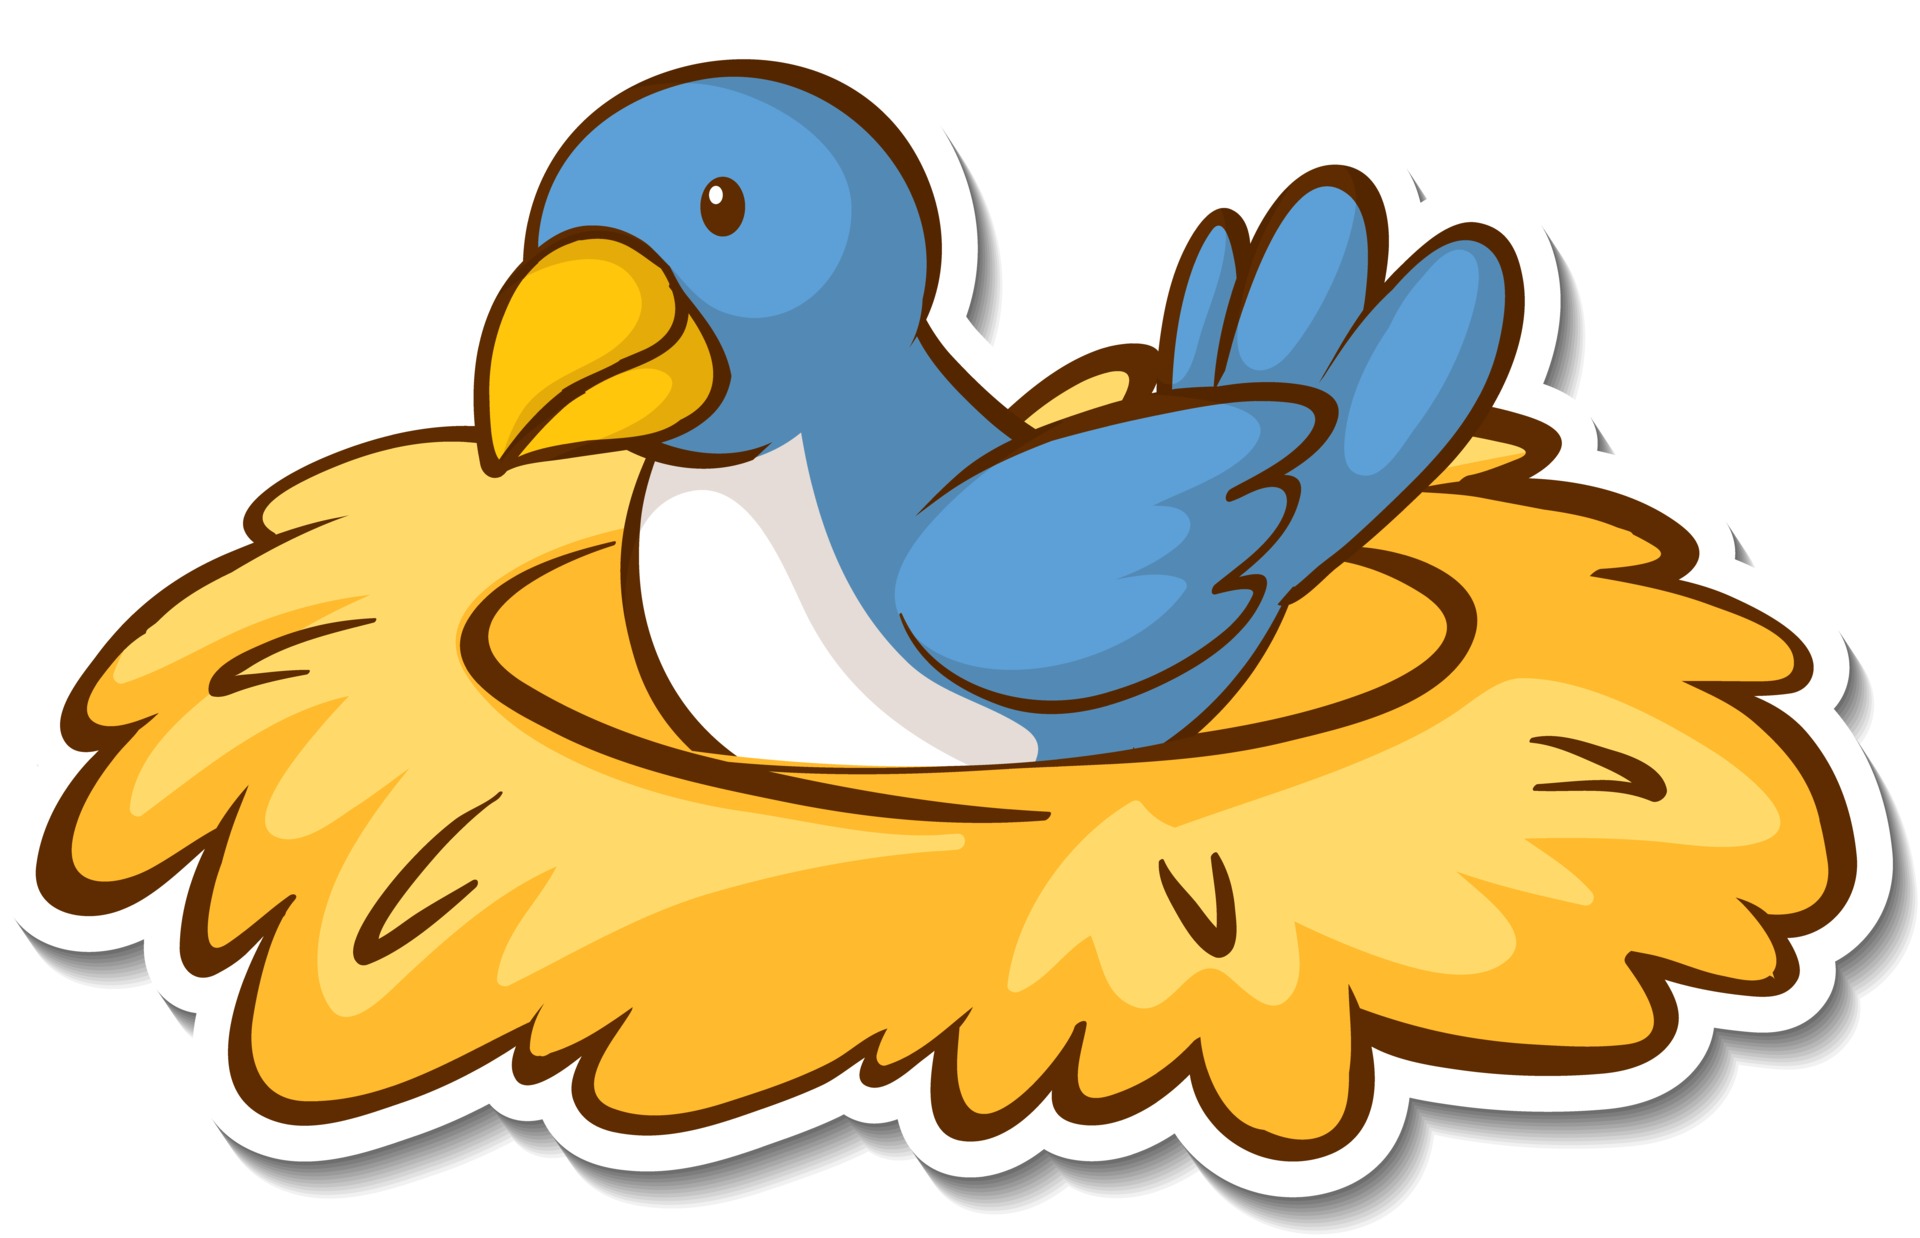 Птица сидит на знаке. Картинка богатый птица сидит для детей. Bird sitting on the Nest. A Bird with small chicks in a Nest illustration.